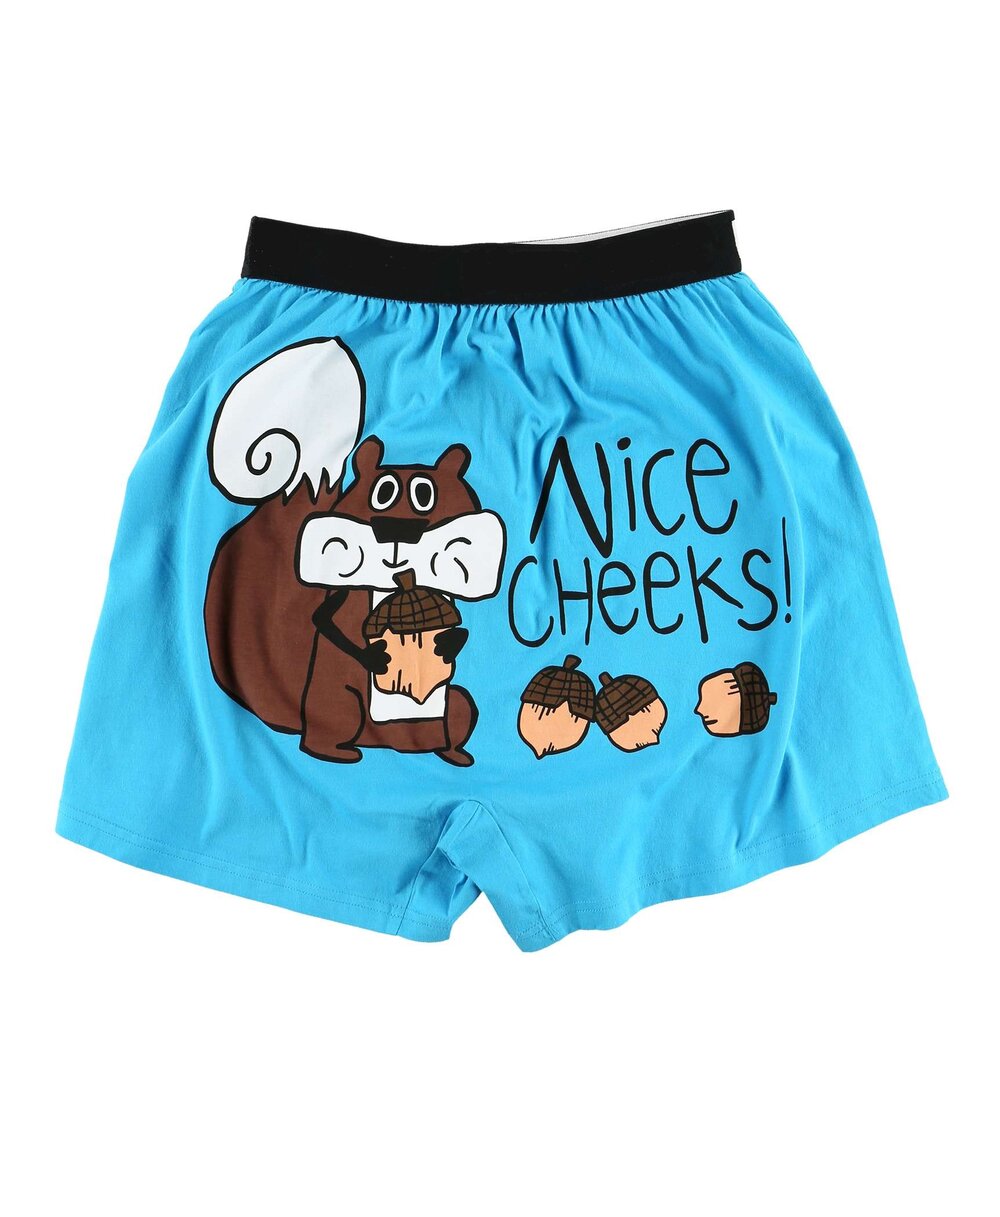 Nice Cheeks Boxer Shorts — Ma & Pa's